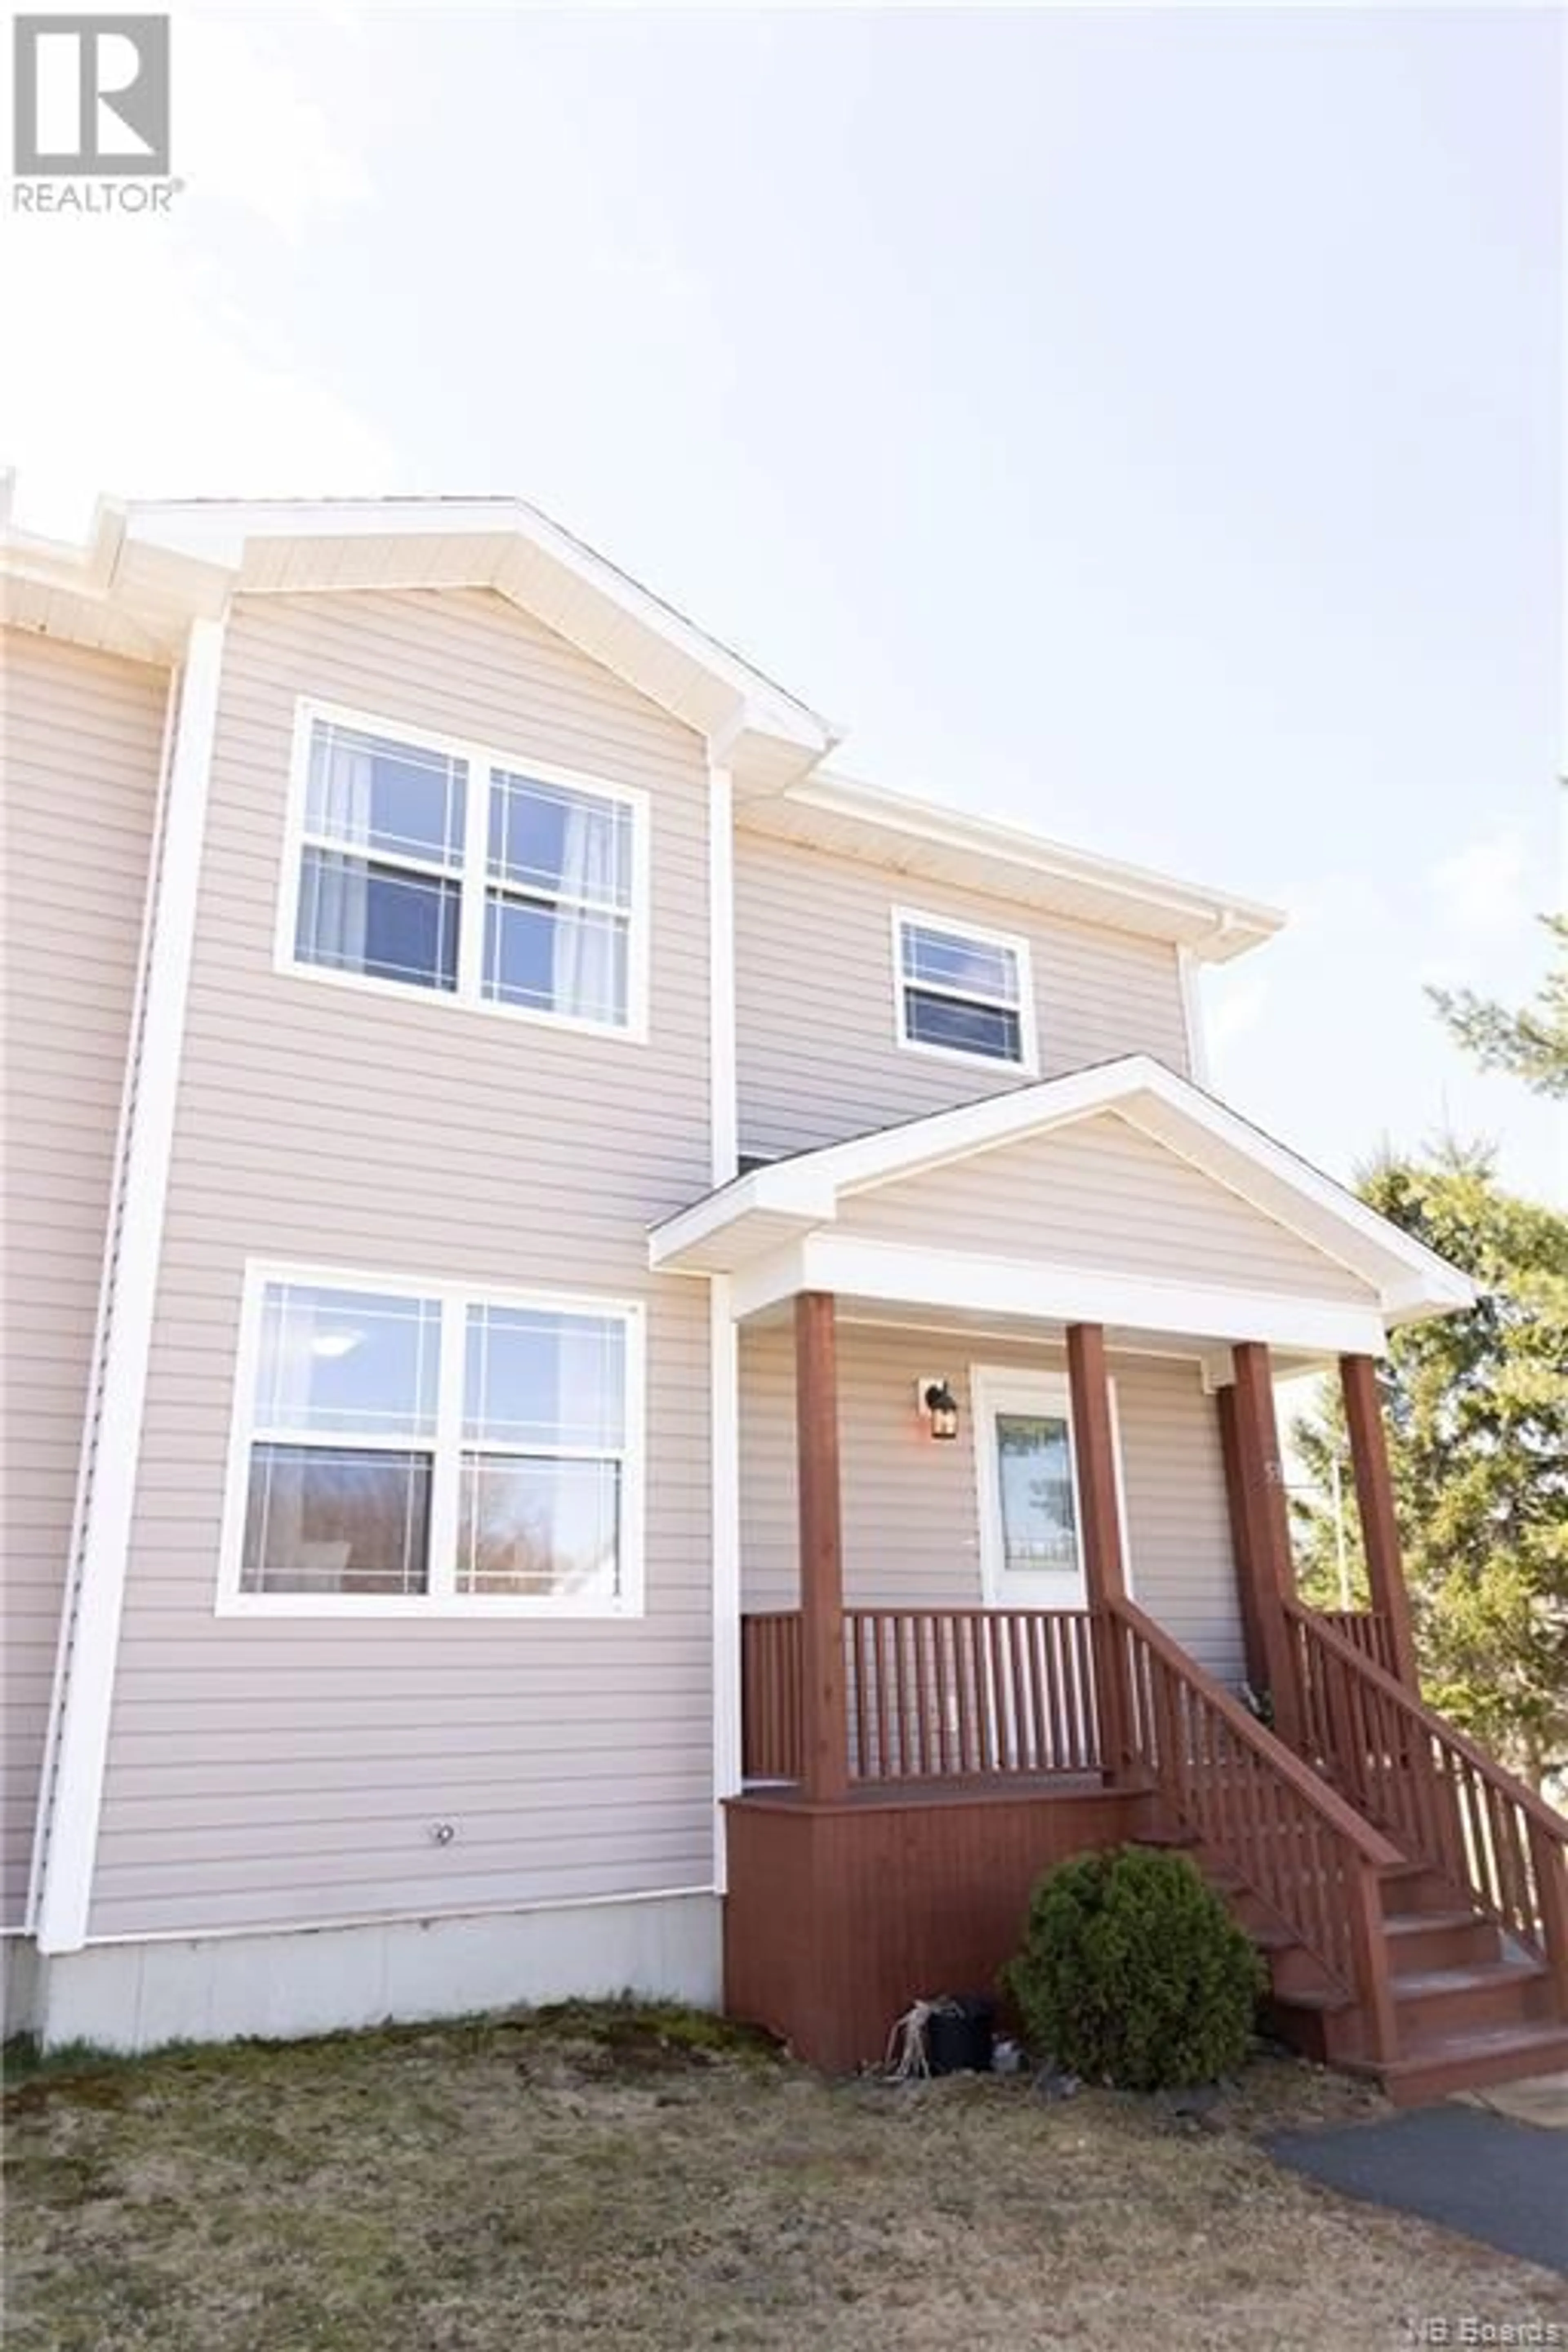 Home with vinyl exterior material for 53 Second Street, Miramichi New Brunswick E1V5V1